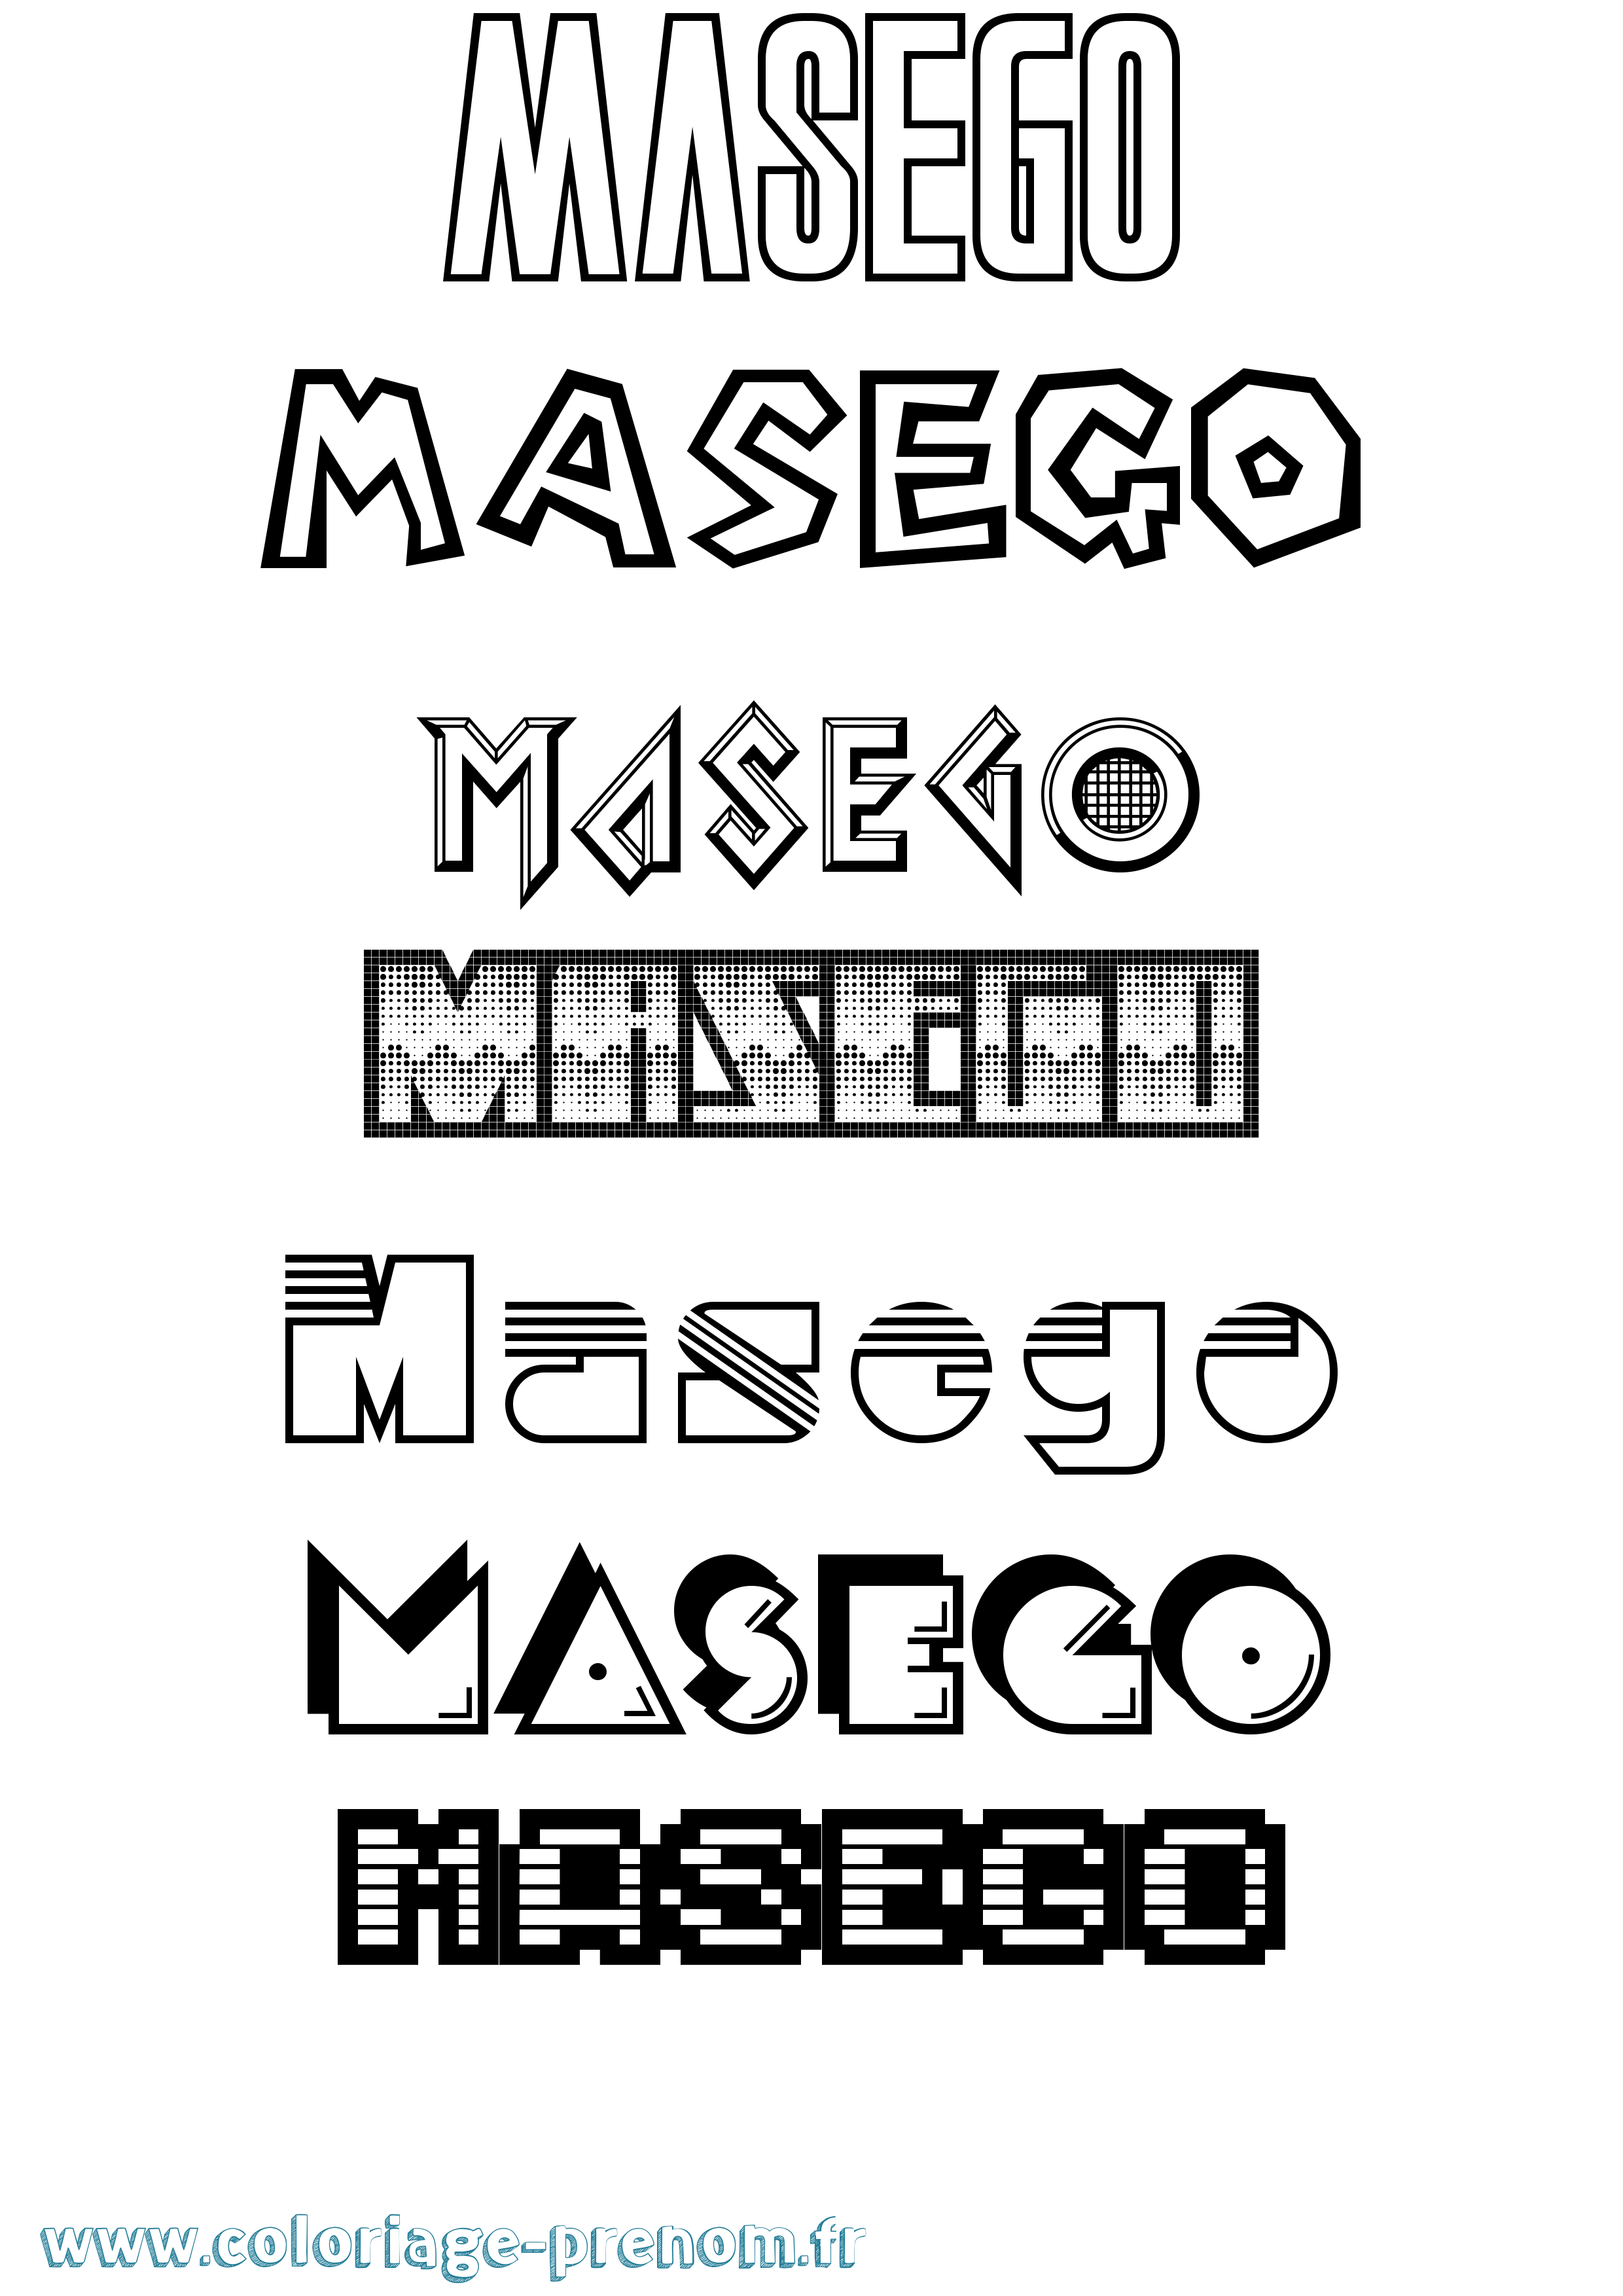 Coloriage prénom Masego Jeux Vidéos